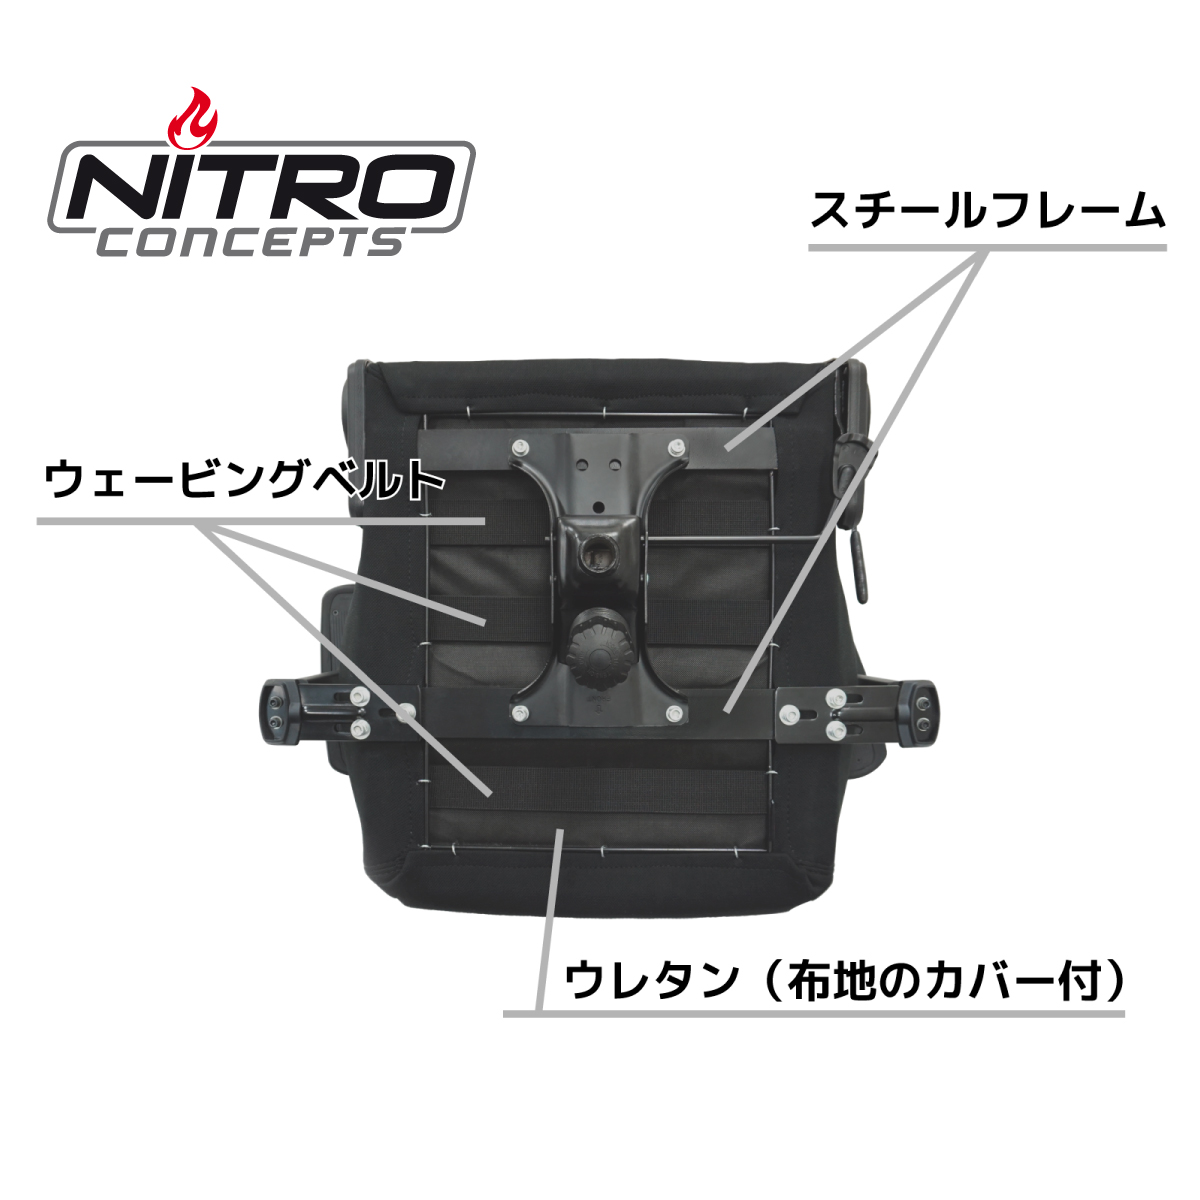 Nitro Concepts S300 - Digital Camo - 株式会社アーキサイト